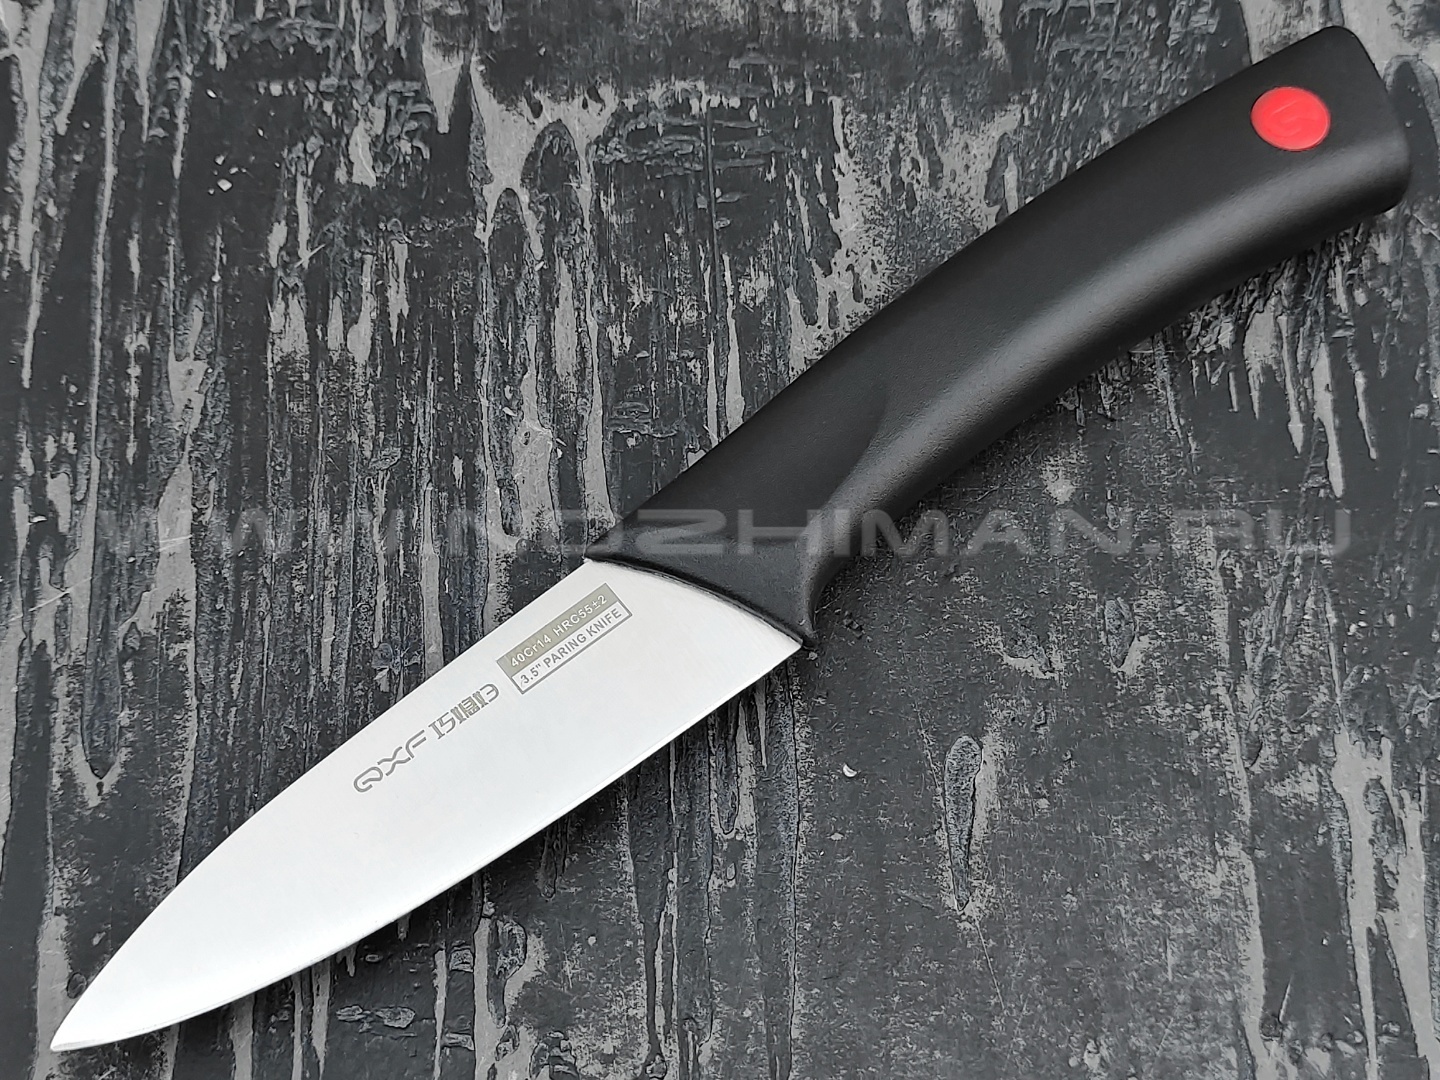 QXF овощной нож R-4373 сталь 40Cr14, рукоять ABS